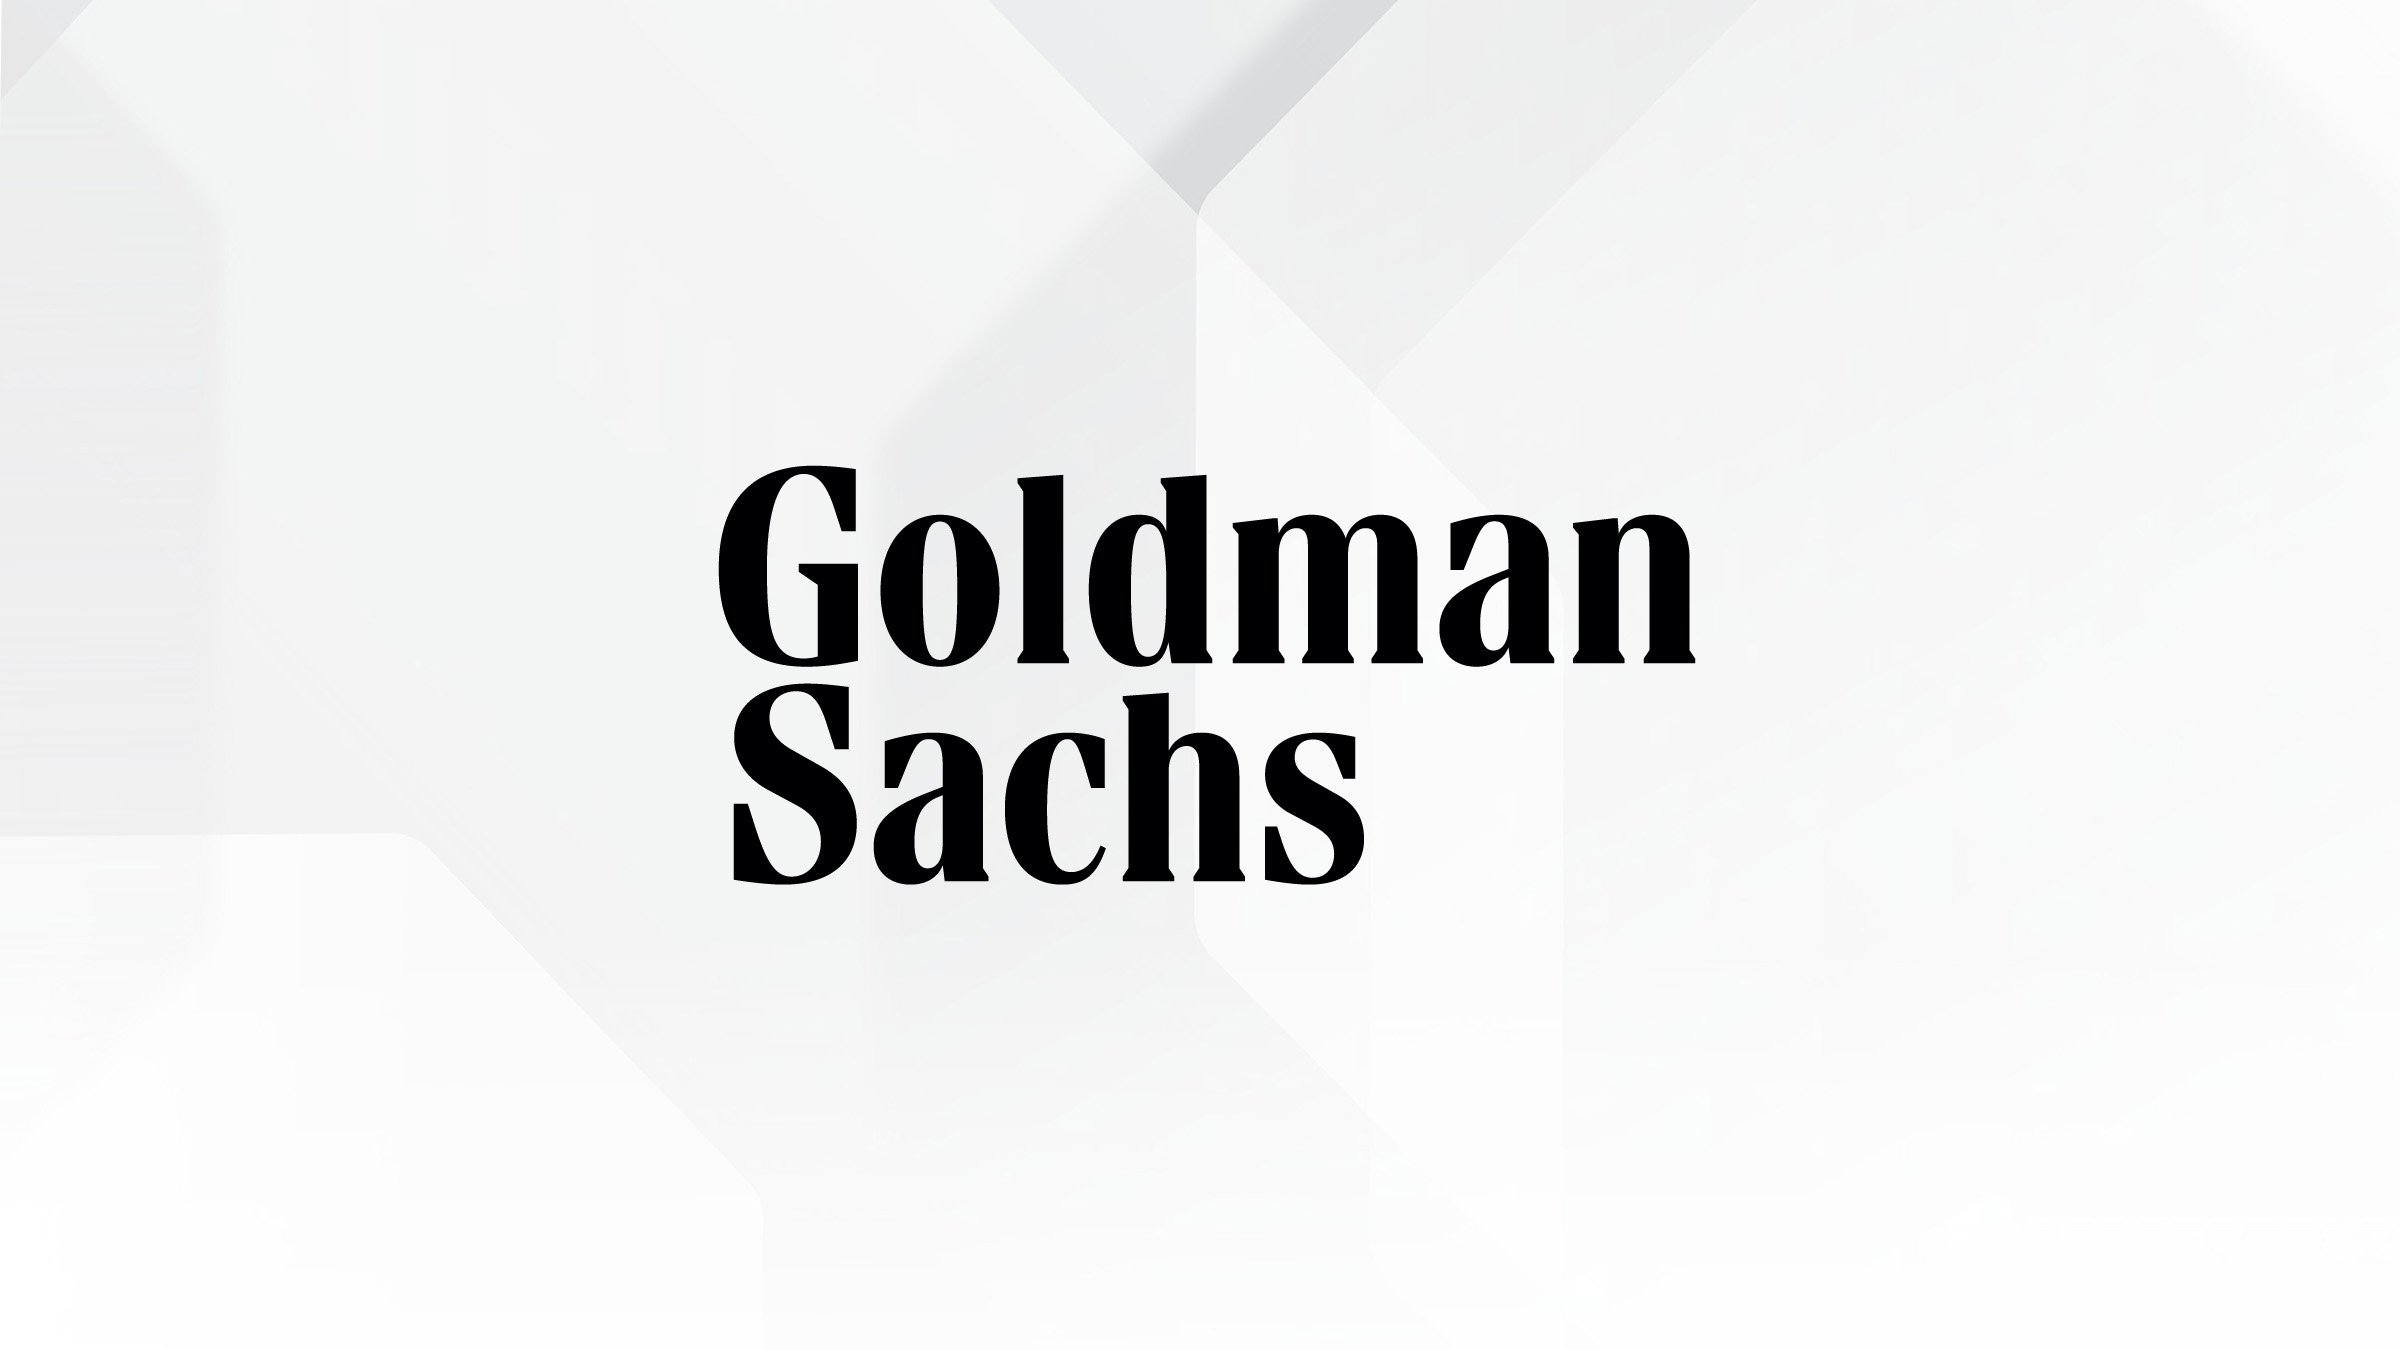 Goldman Sachs Industrials & Materials Conference